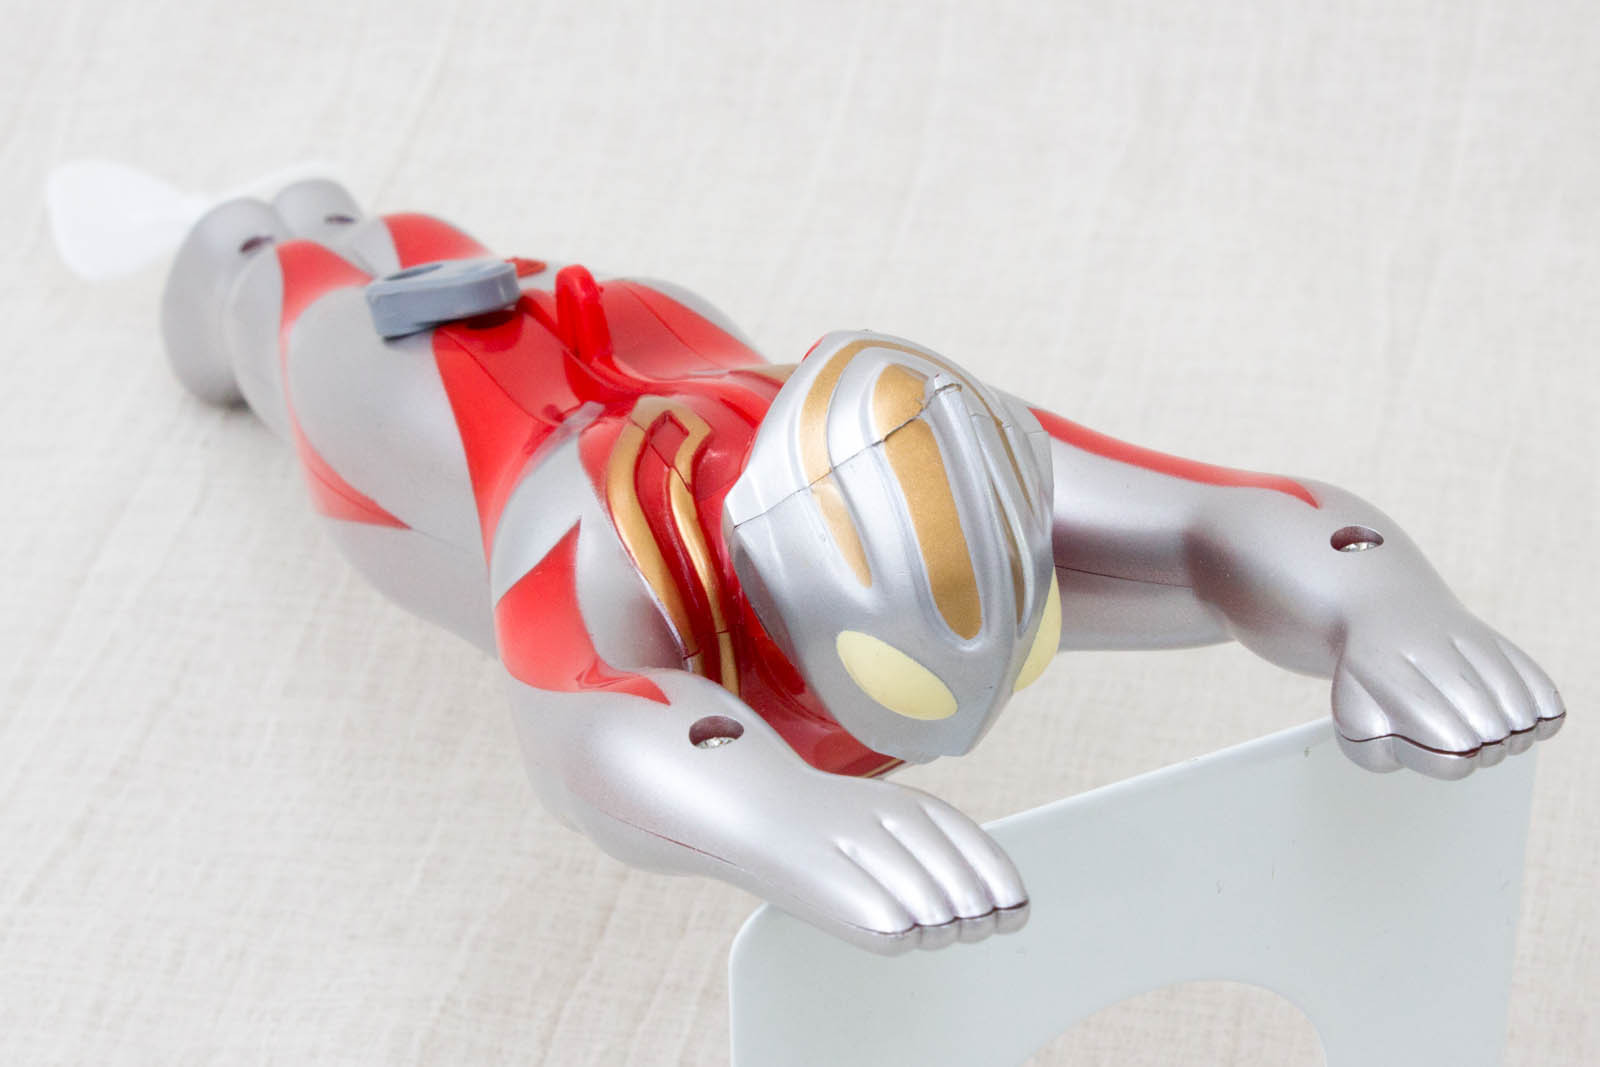 [JUNK ITEM] Ultraman Gaia Figure Tsuburaya JAPAN TOKUSATSU ANIME